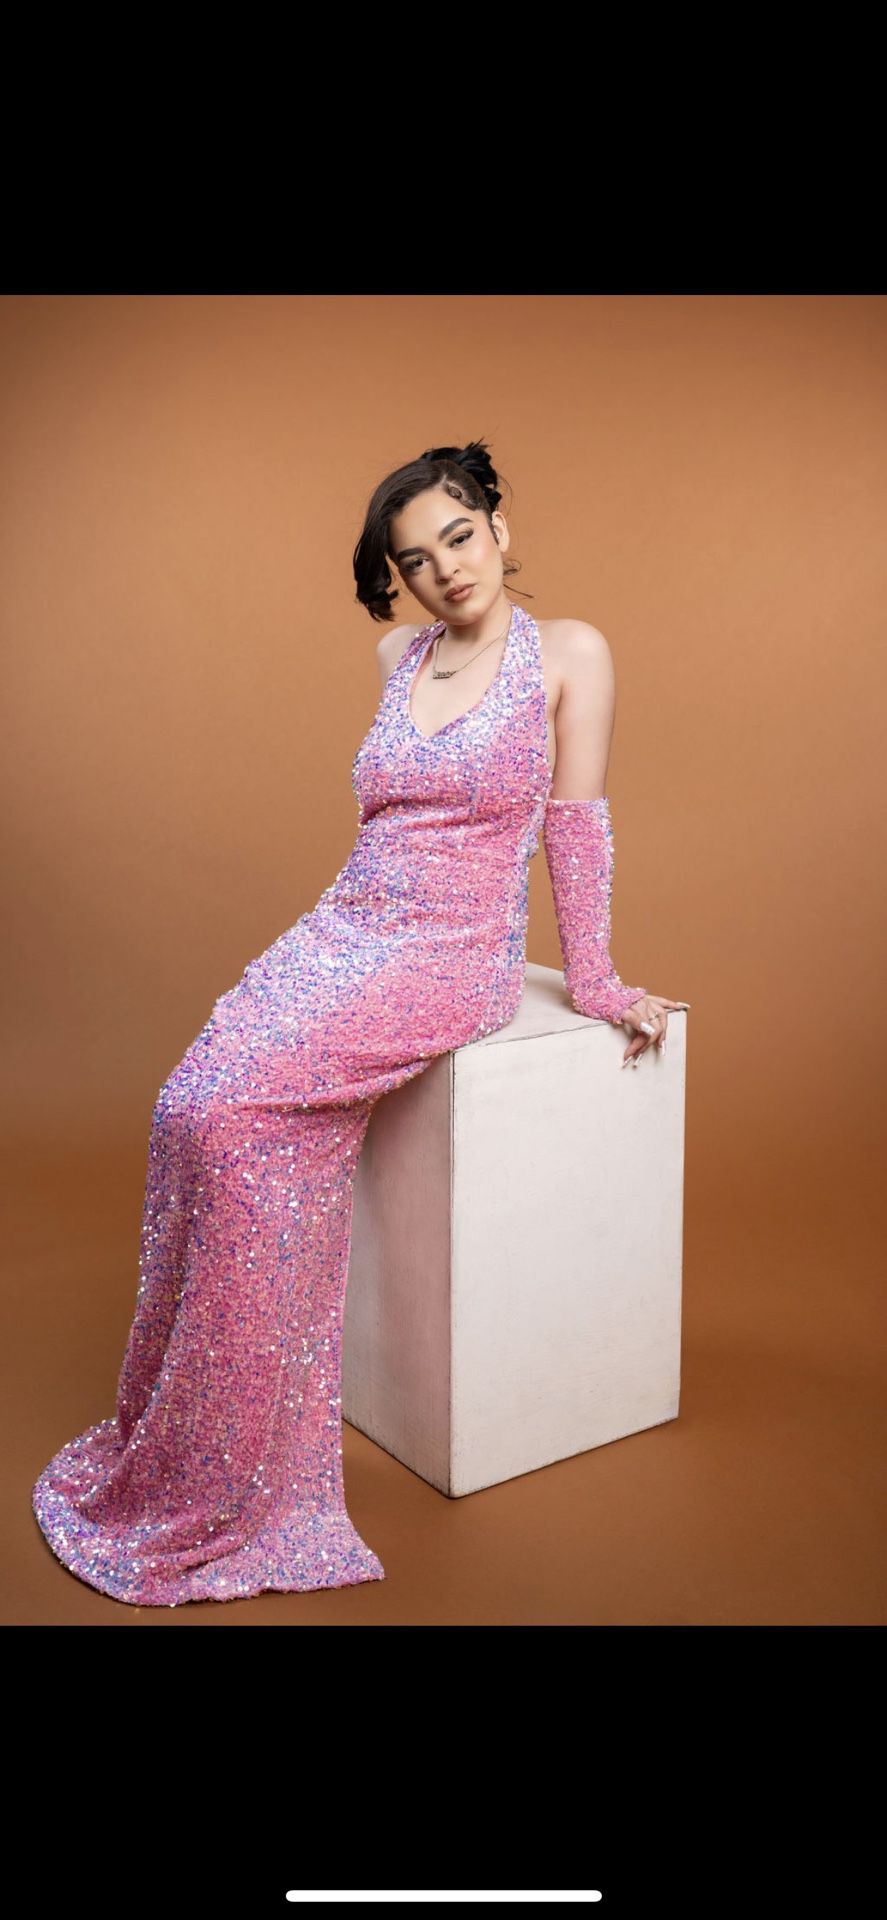 Aglist Pink Sequin Small Dress 